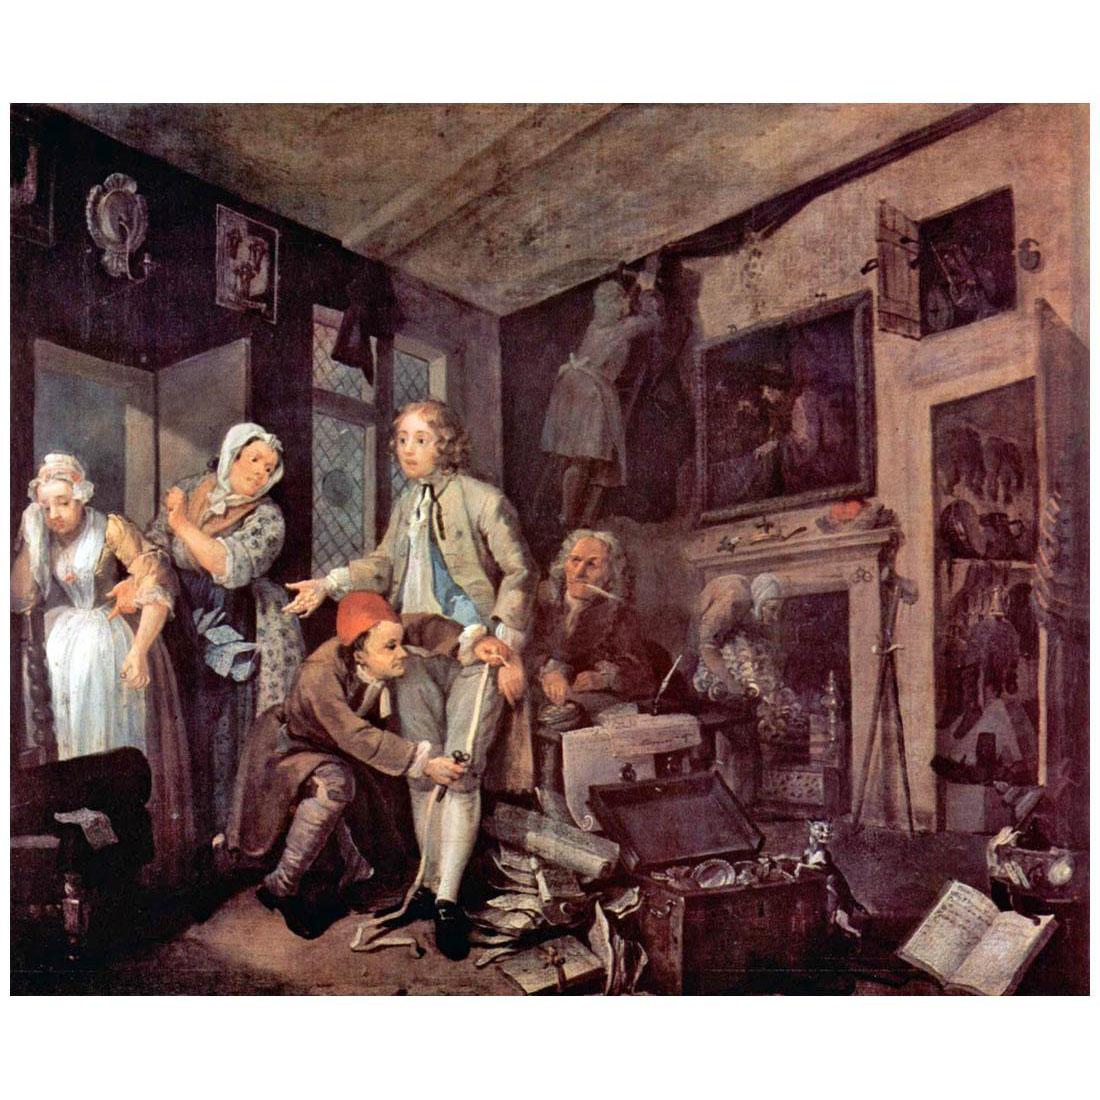 William Hogarth. The Heir. A Rake’s Progress #1. 1735. Soane Museum London